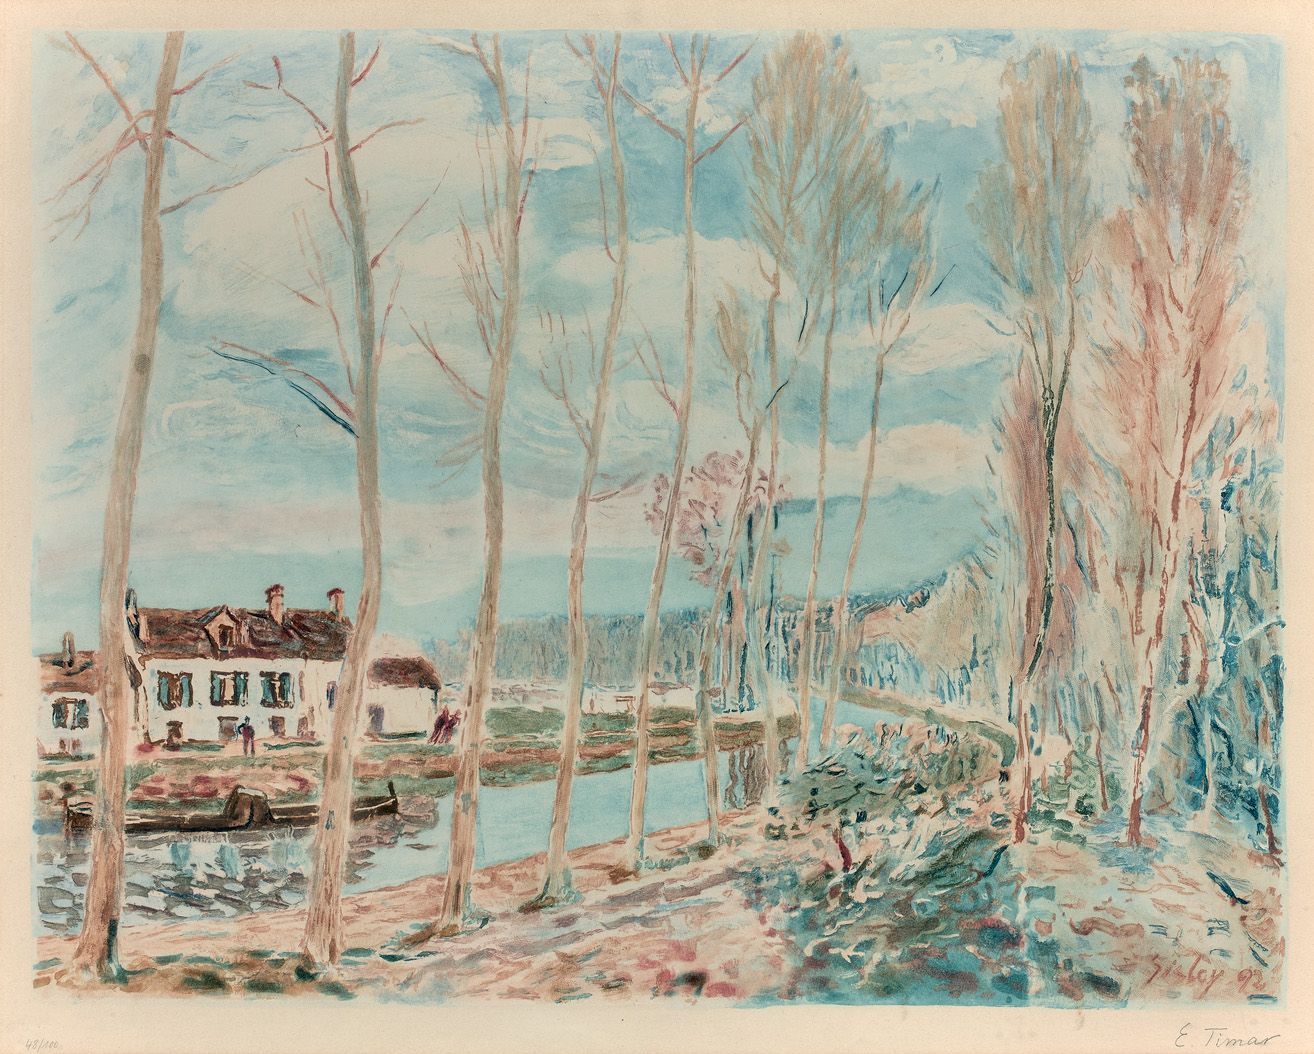 Null Emeric TIMAR (1898-1950)，在Sisley之后的作品

沙图，杨树大道

彩色石版画，右下角有艺术家签名，注明48/100。

&hellip;